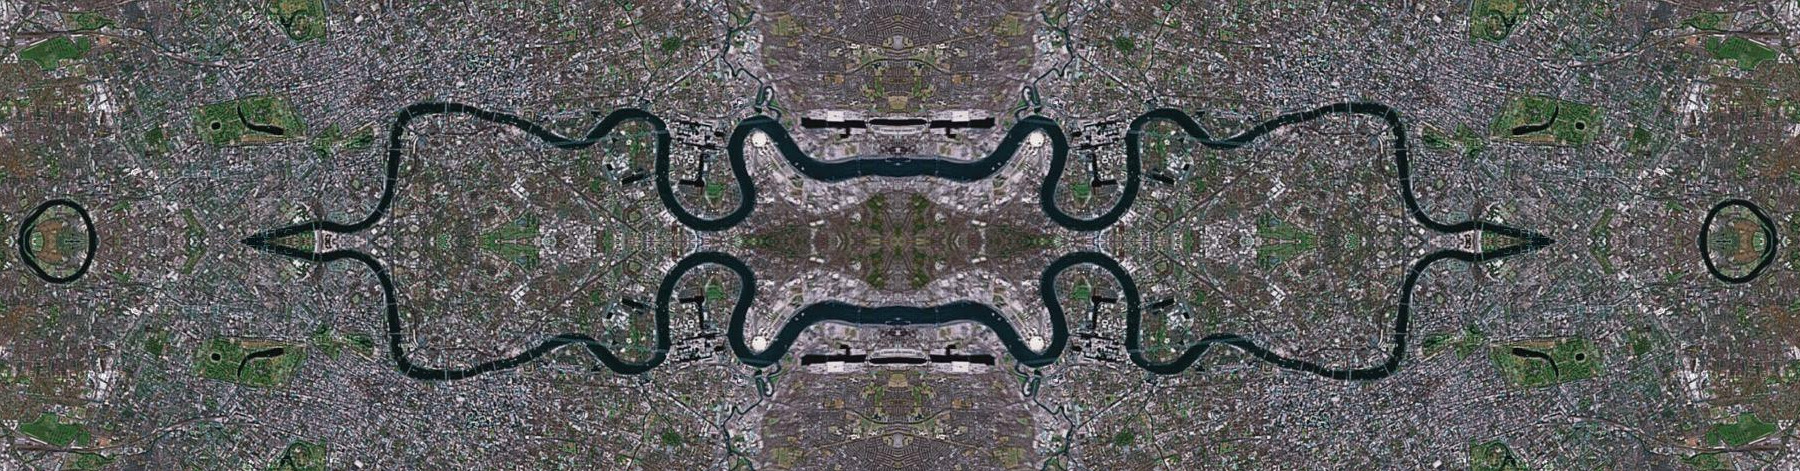 londres-kaleidoscopio